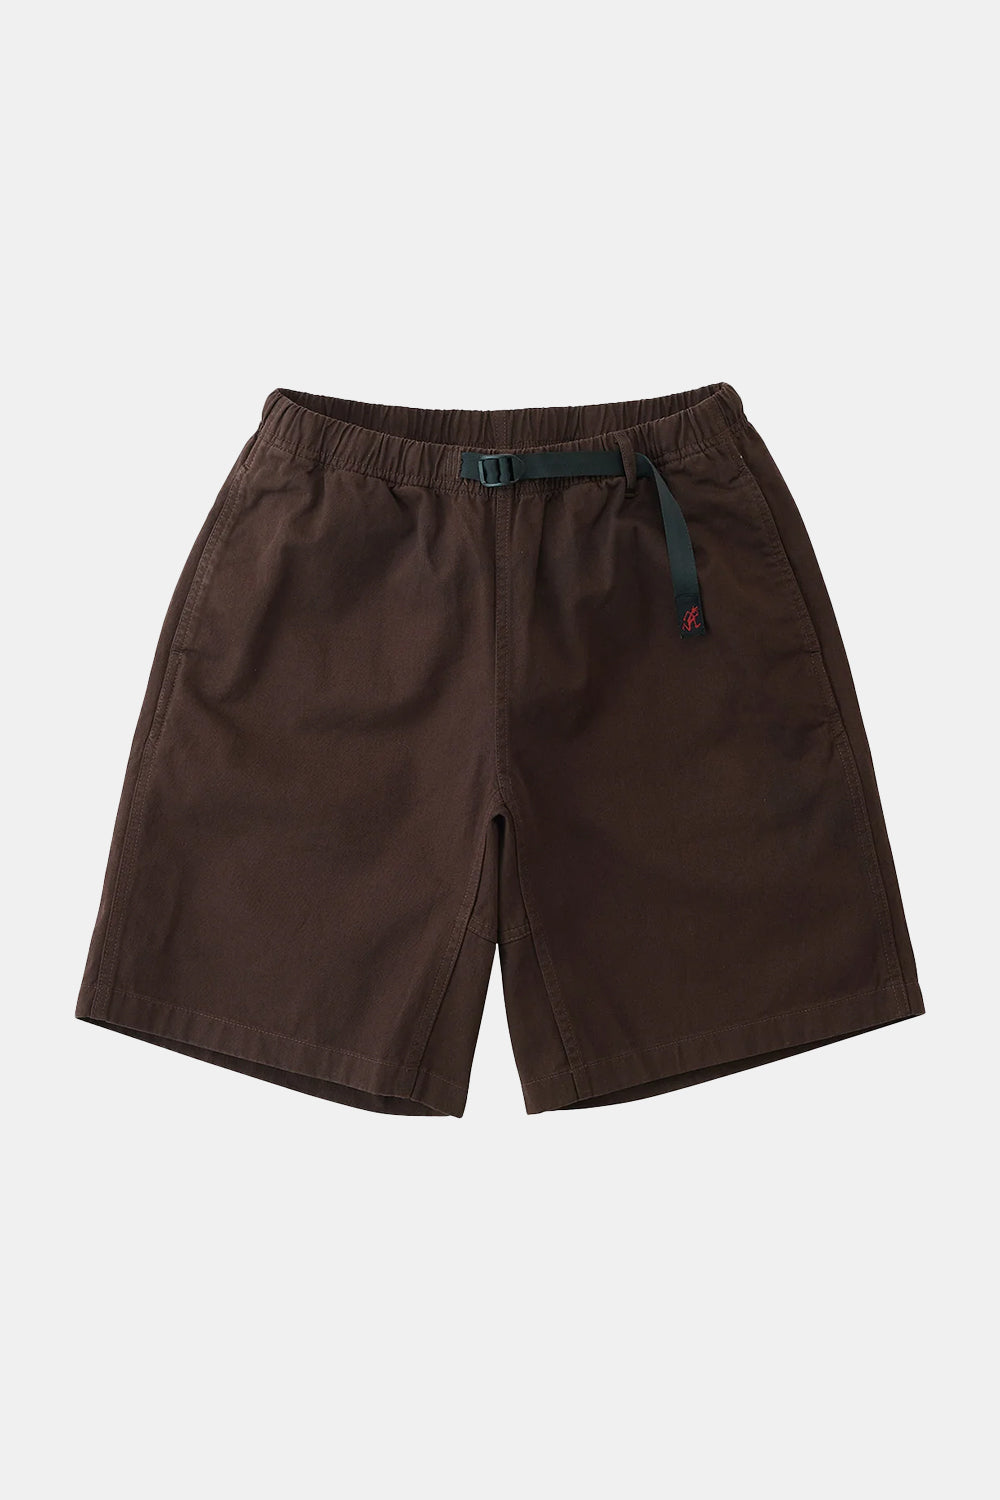 Gramicci G-Shorts Double-Ringspun Organic Cotton Twill (Dark Brown)